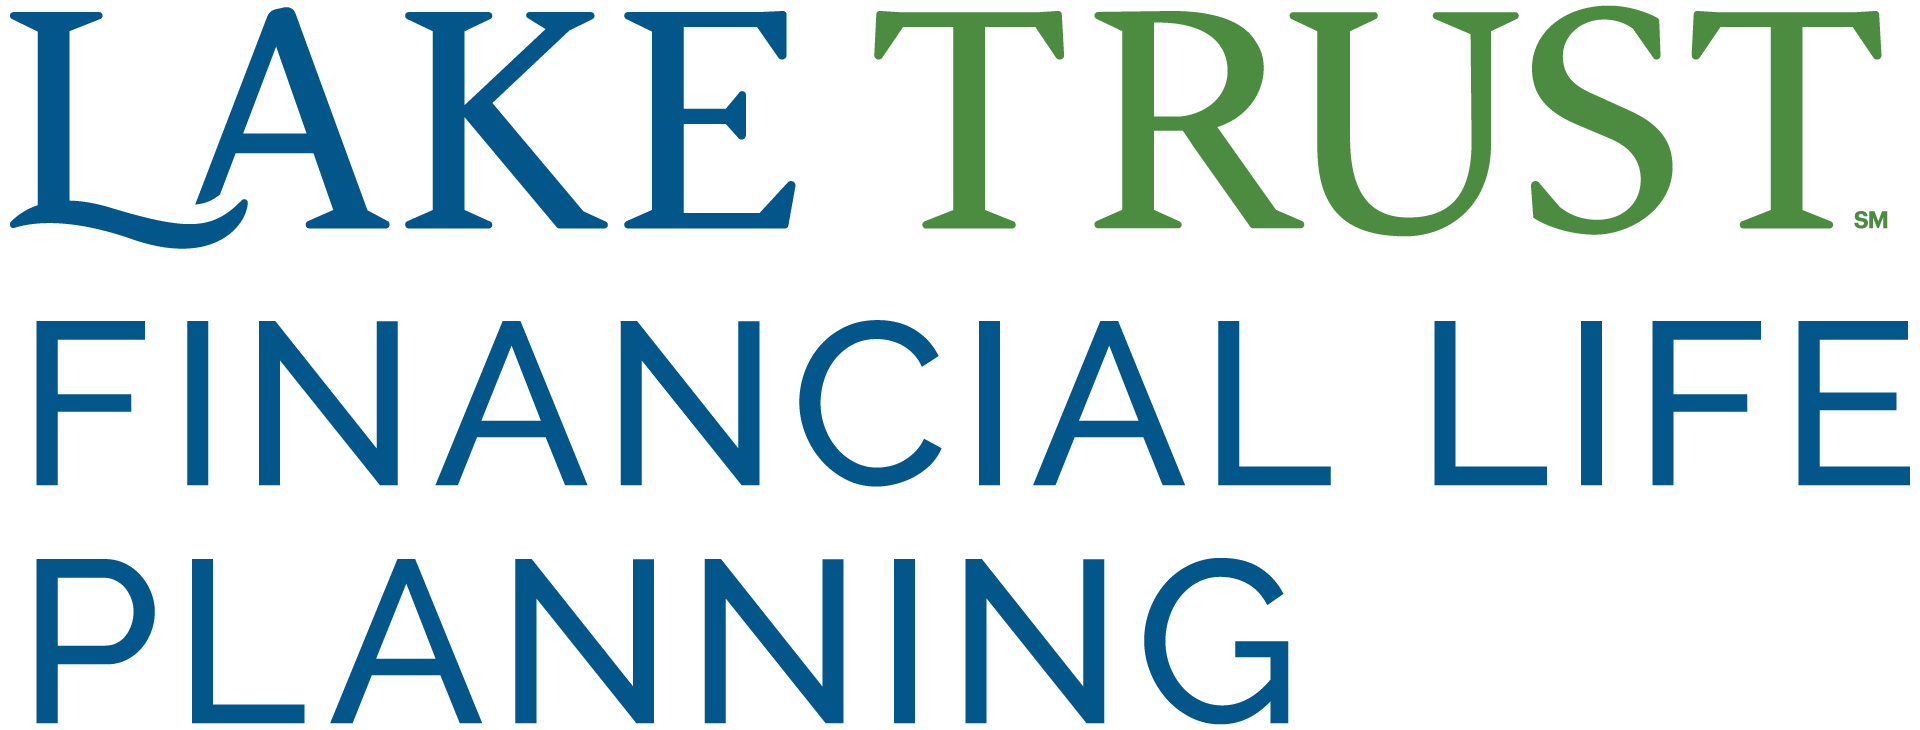 Lake Trust Credit Union - Financial Life Planning